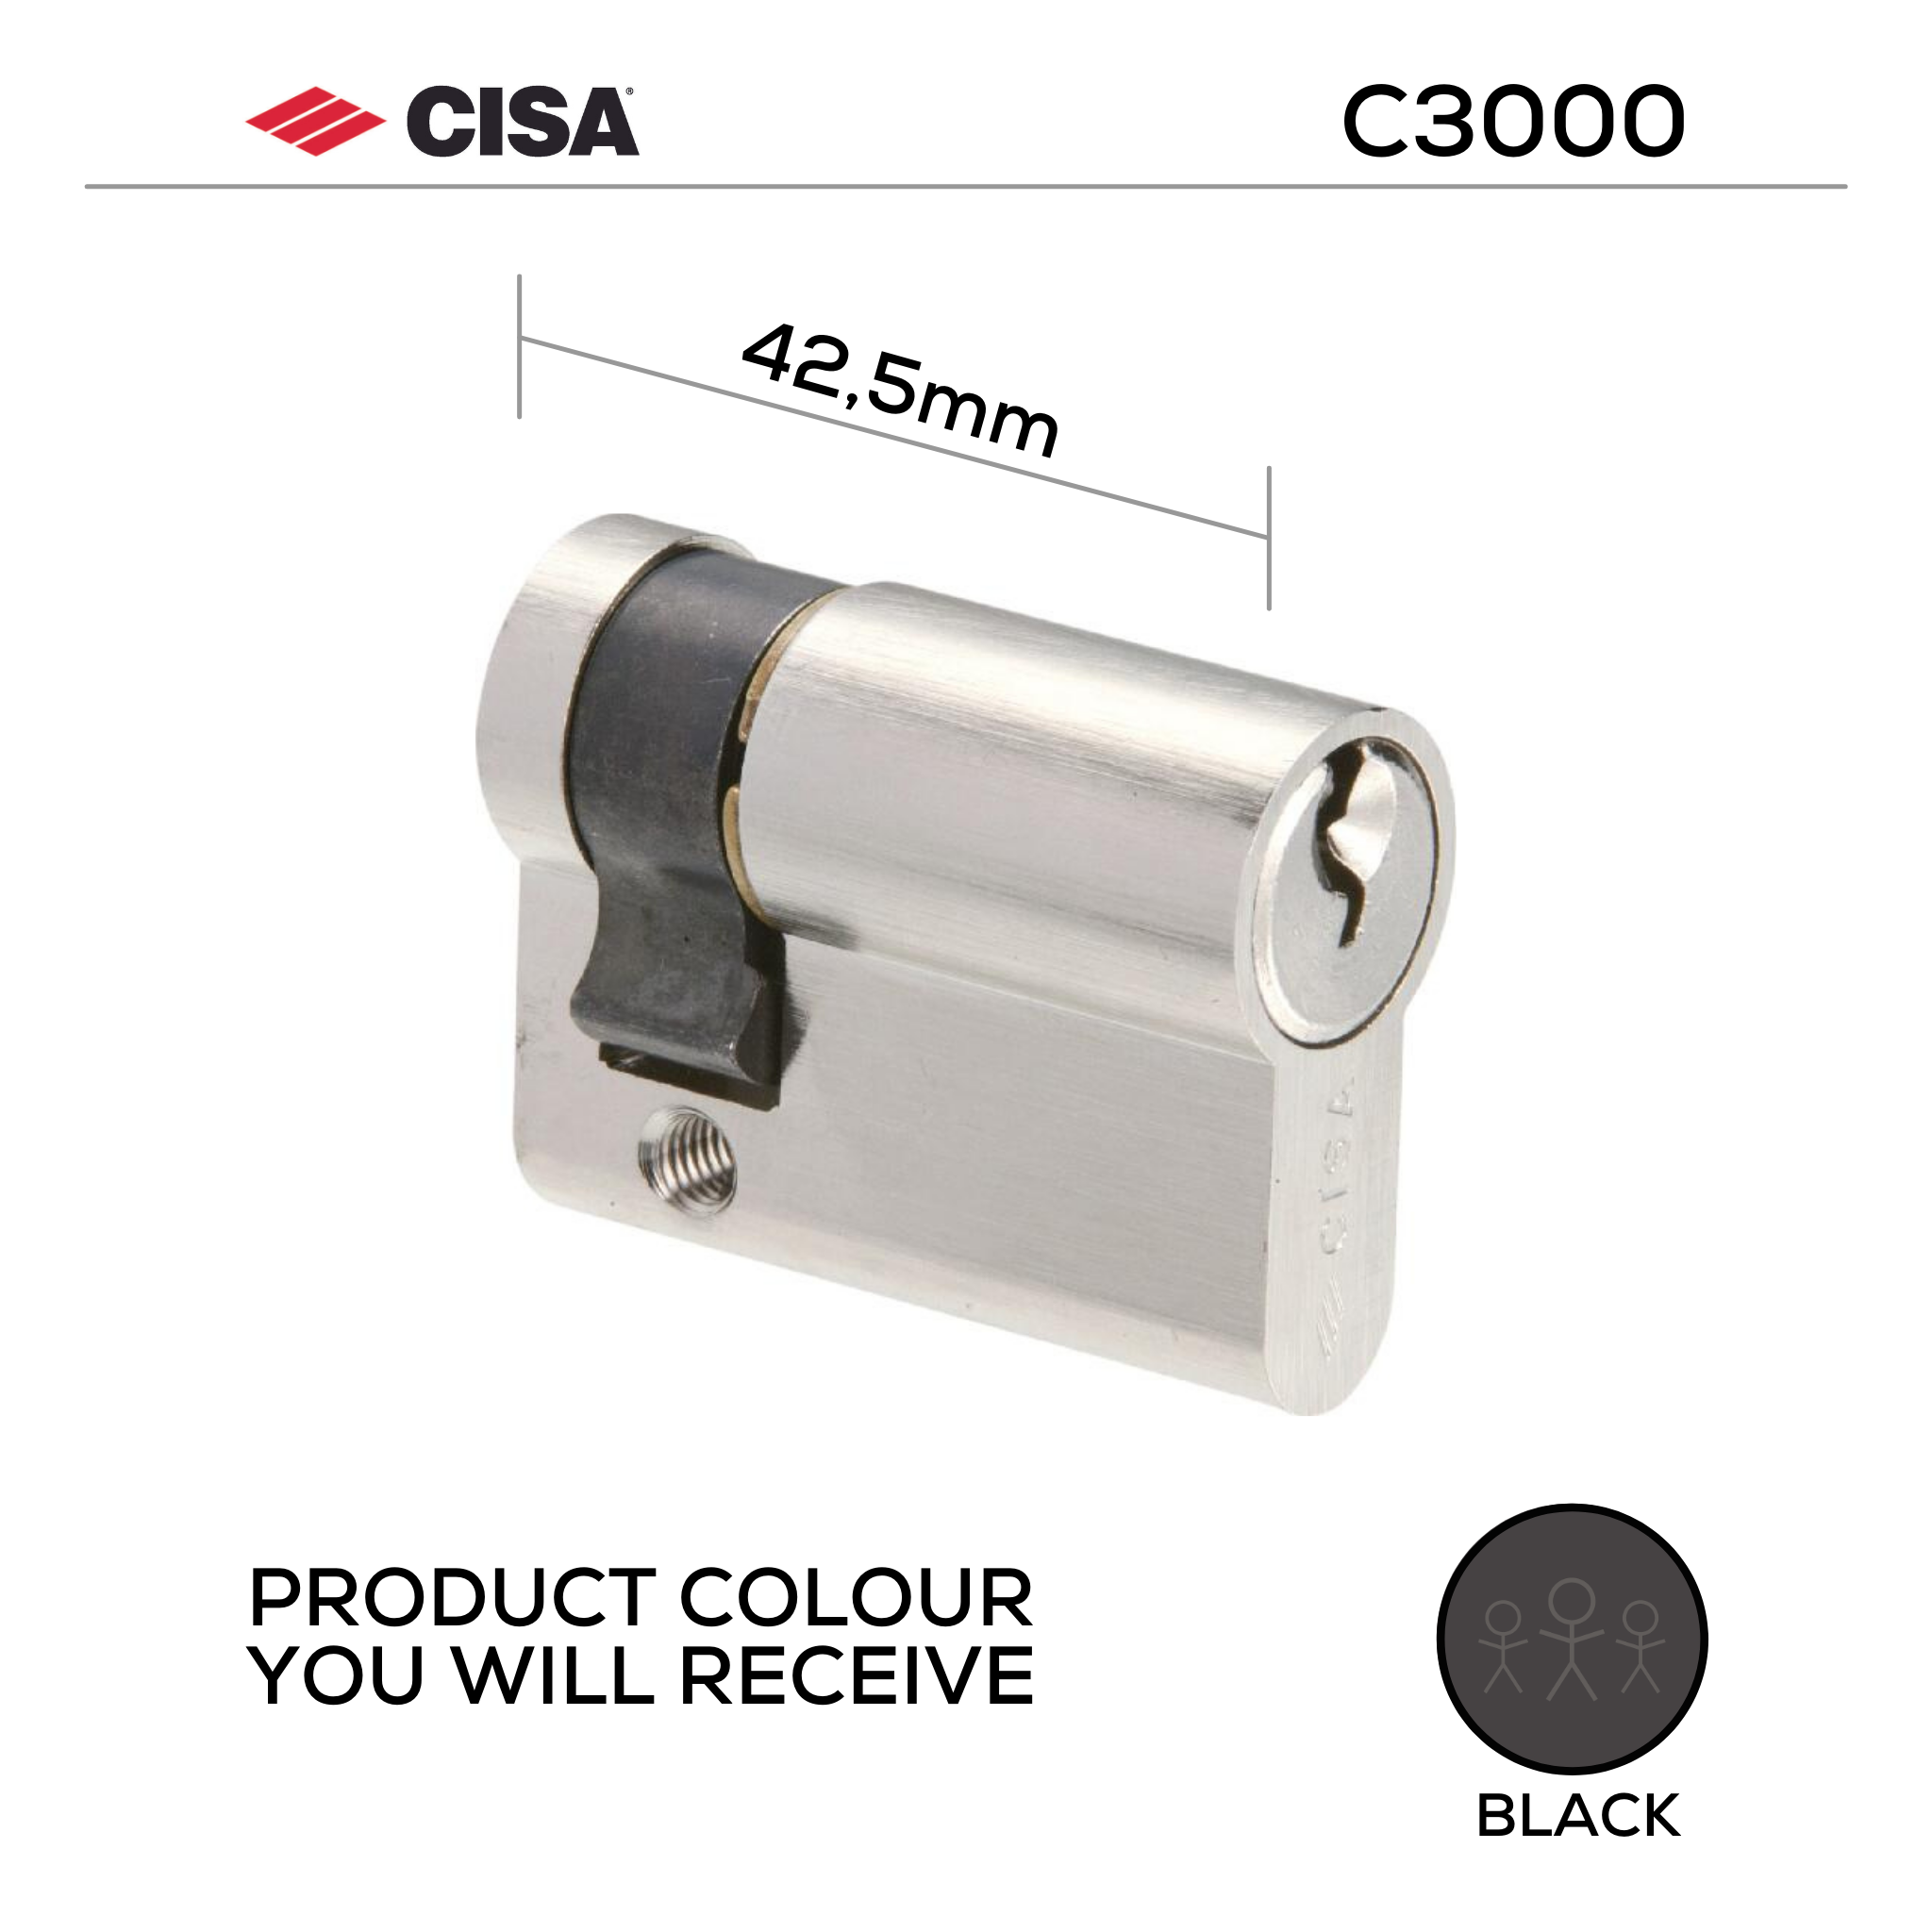 0N314-09-BLK-KD, 42.5mm - 32.5/10, Half (Single Cylinder), C3000, Key, Keyed to Differ (Standard), 3 Keys, 6 Pin, Black, CISA